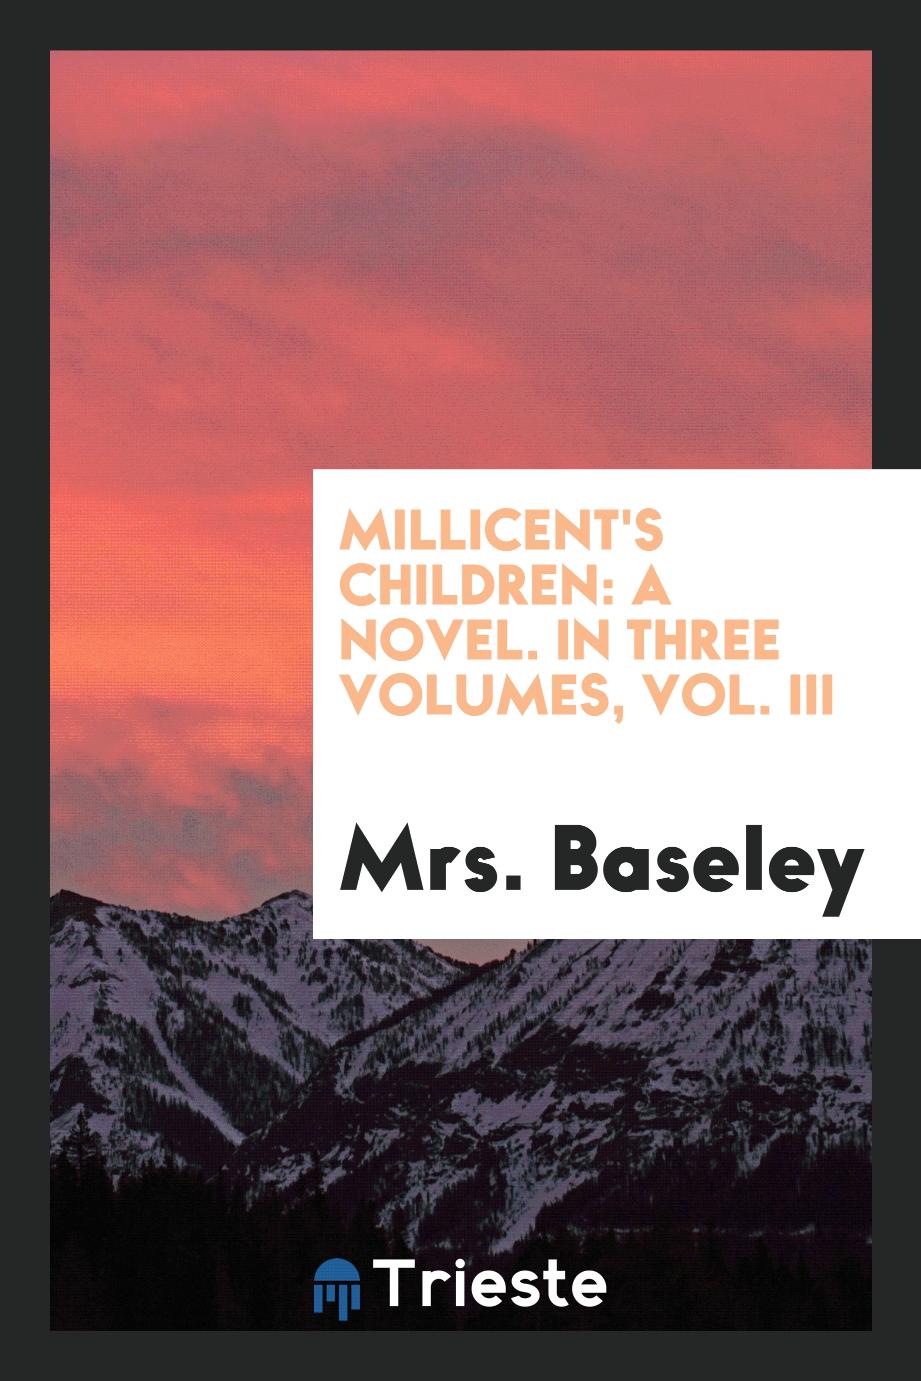 Millicent's Children: A Novel. In Three Volumes, Vol. III